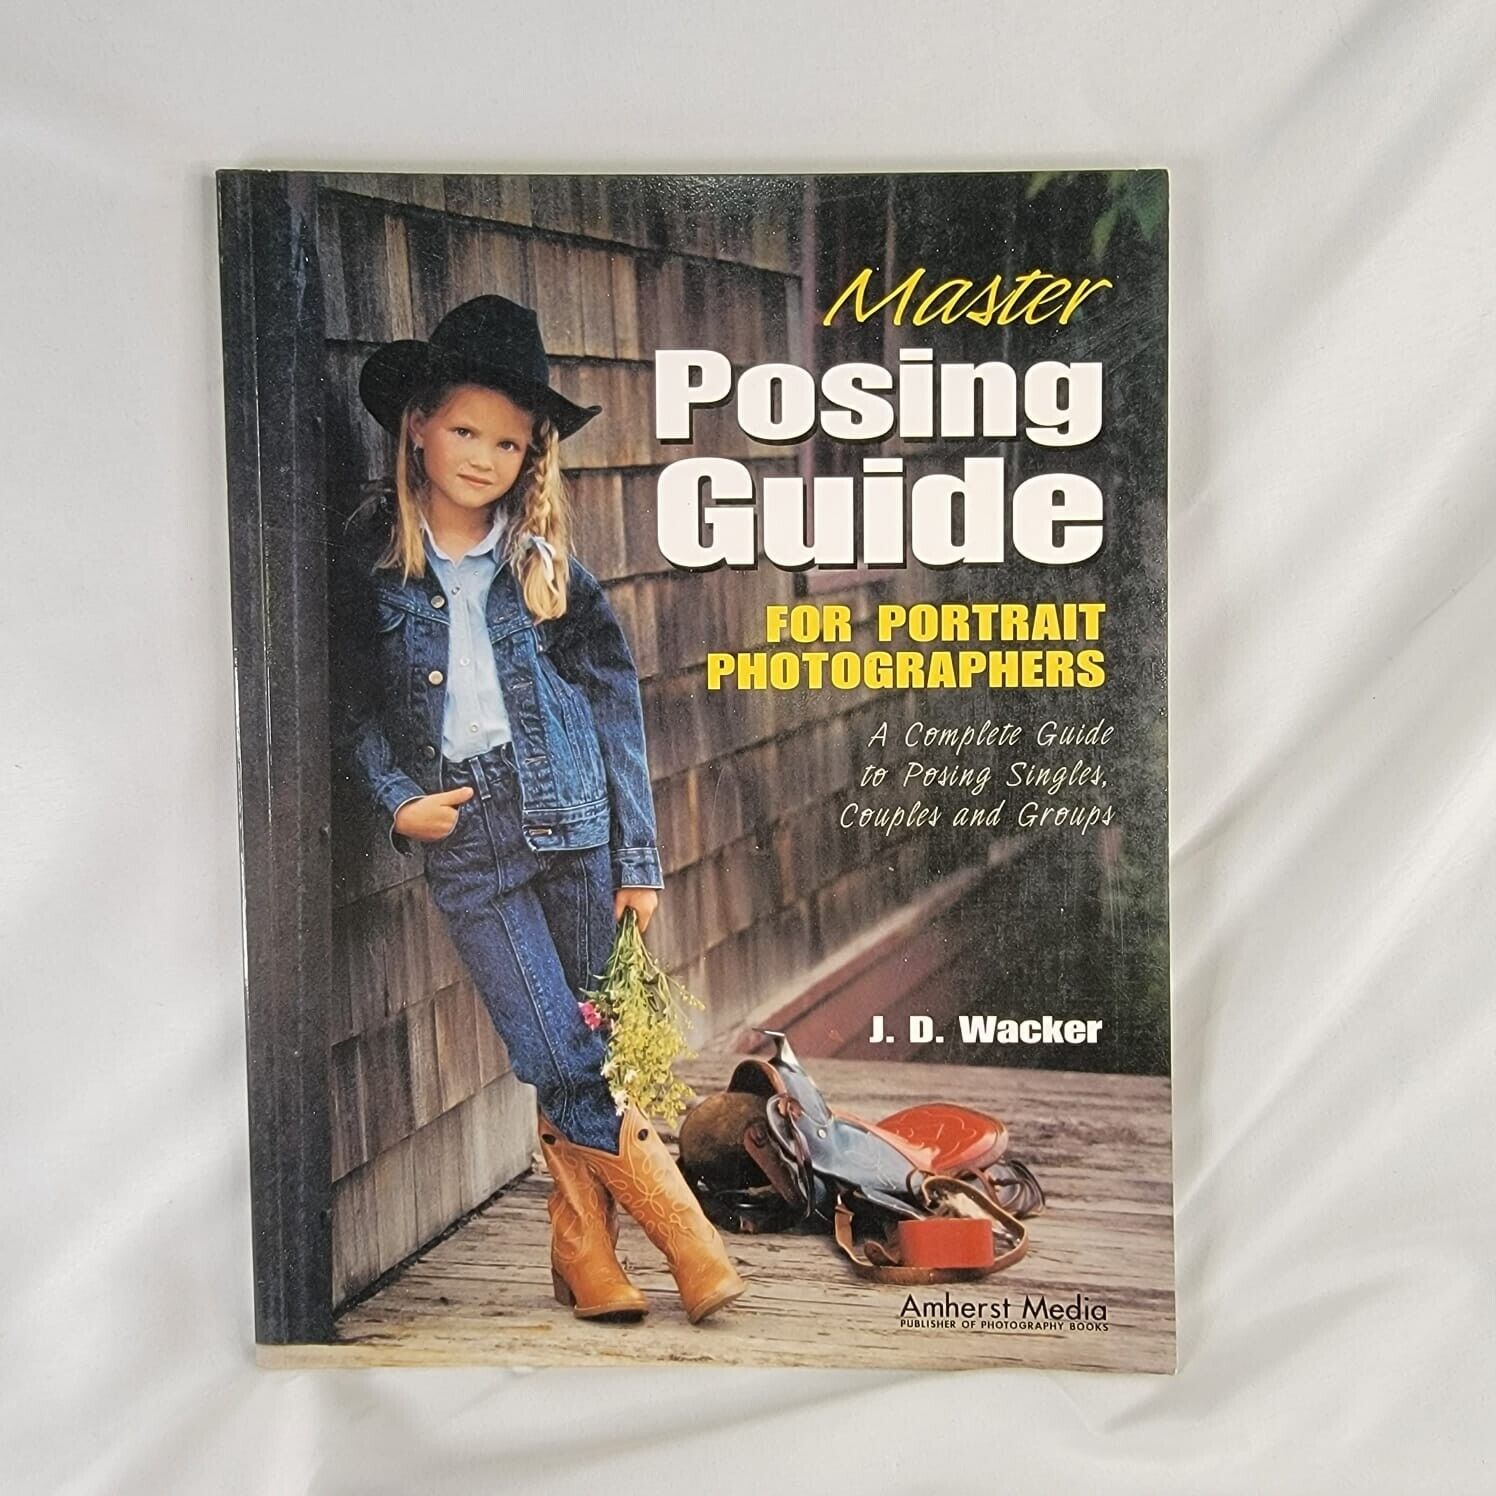 Master Posing Guide for Portrait Photographers by J.D. Wacker 2002